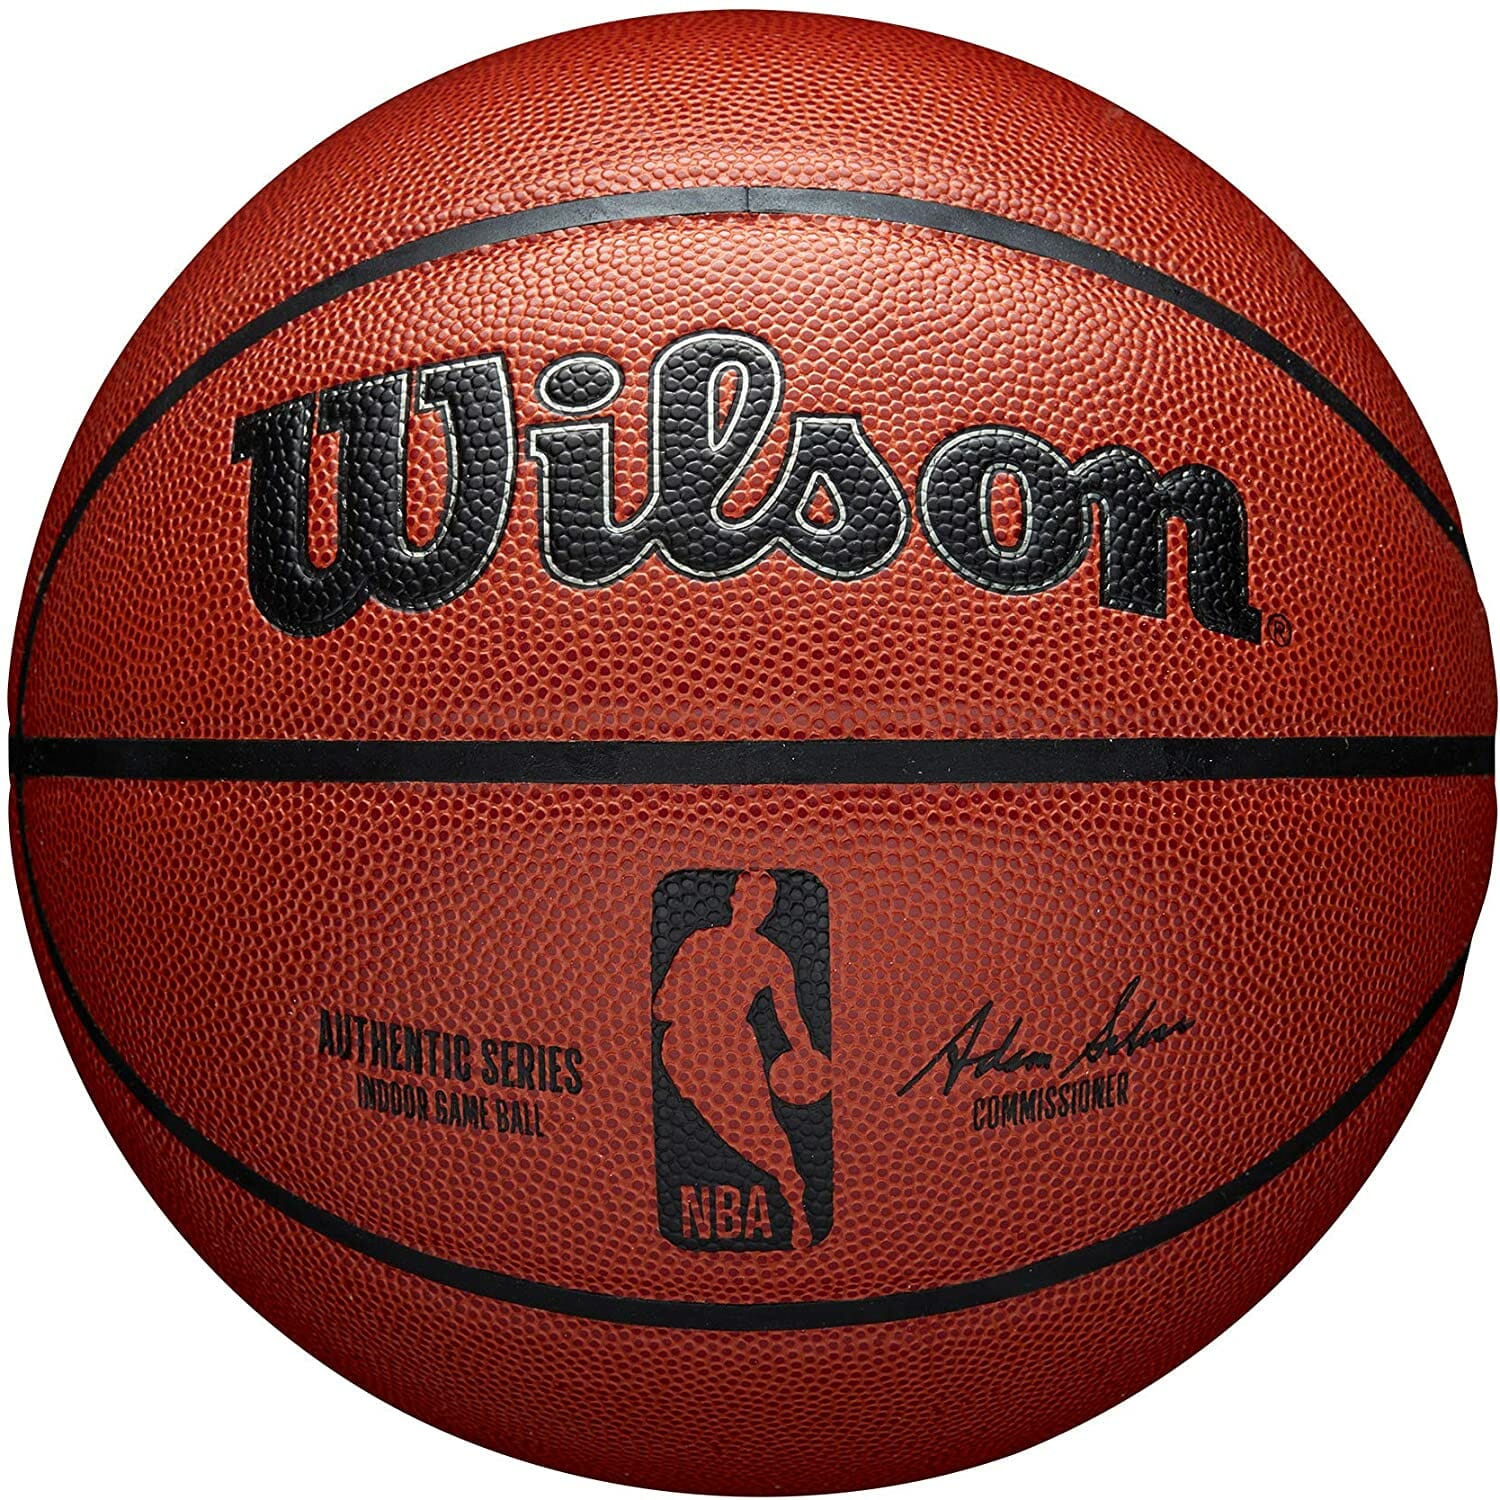 The 7 Best Wilson Basketballs for Indoor or Outdoor Use